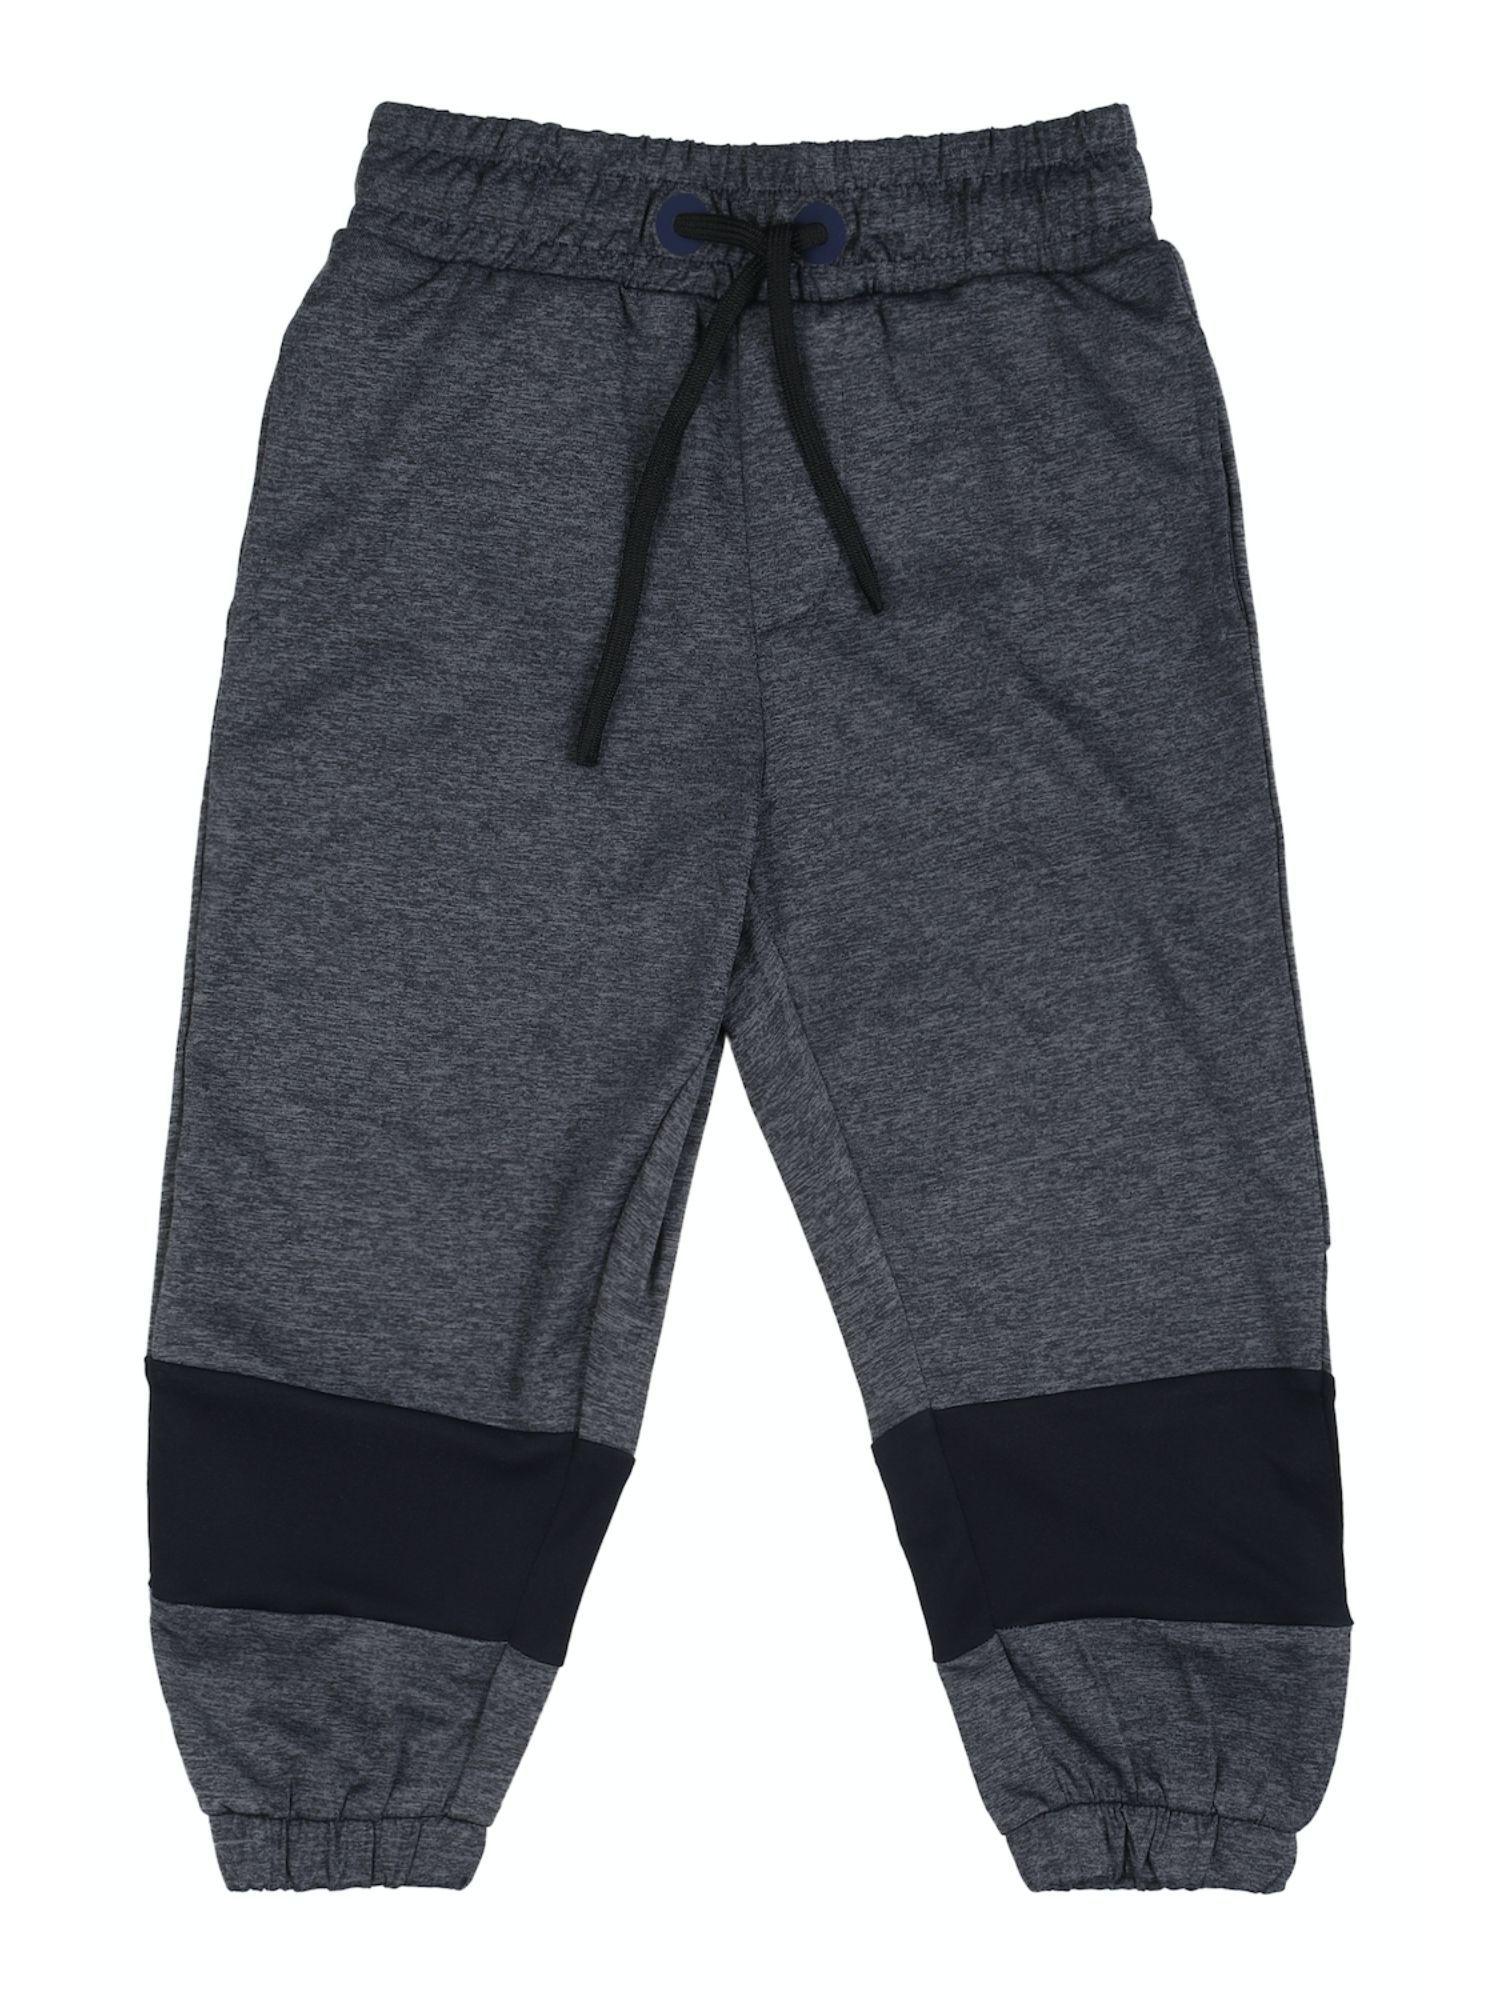 boys grey regular fit patterned track pants